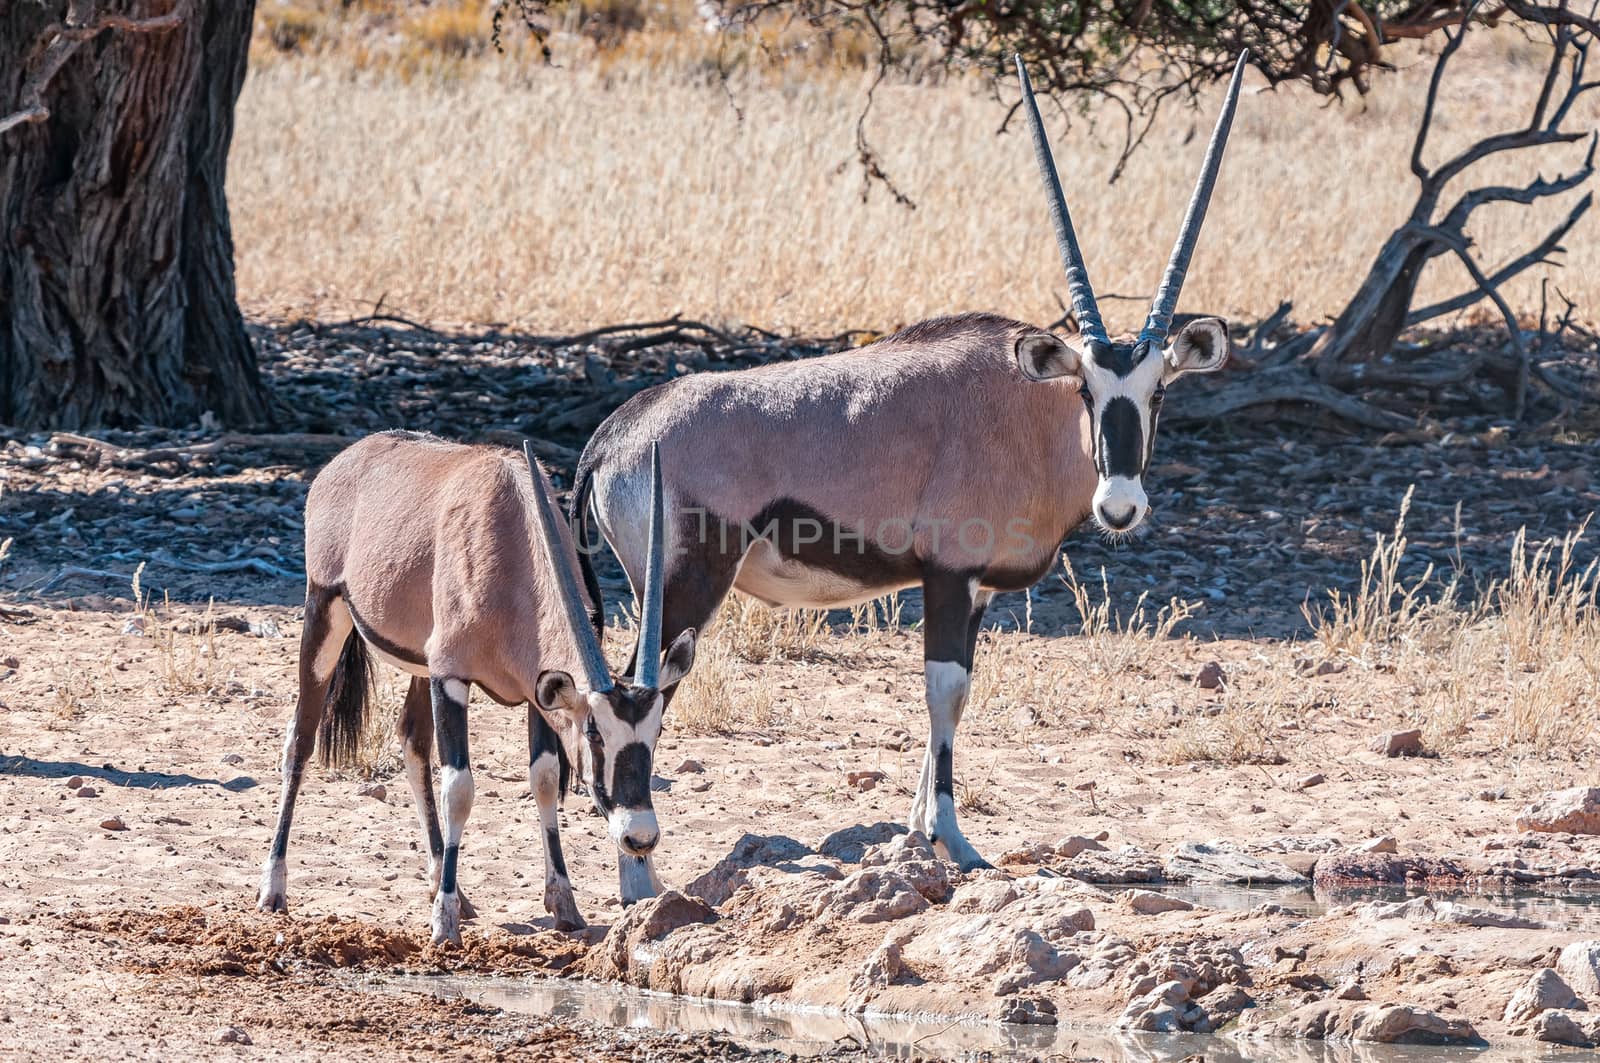 Two oryx at a waterhole in the arid Kgalagadi